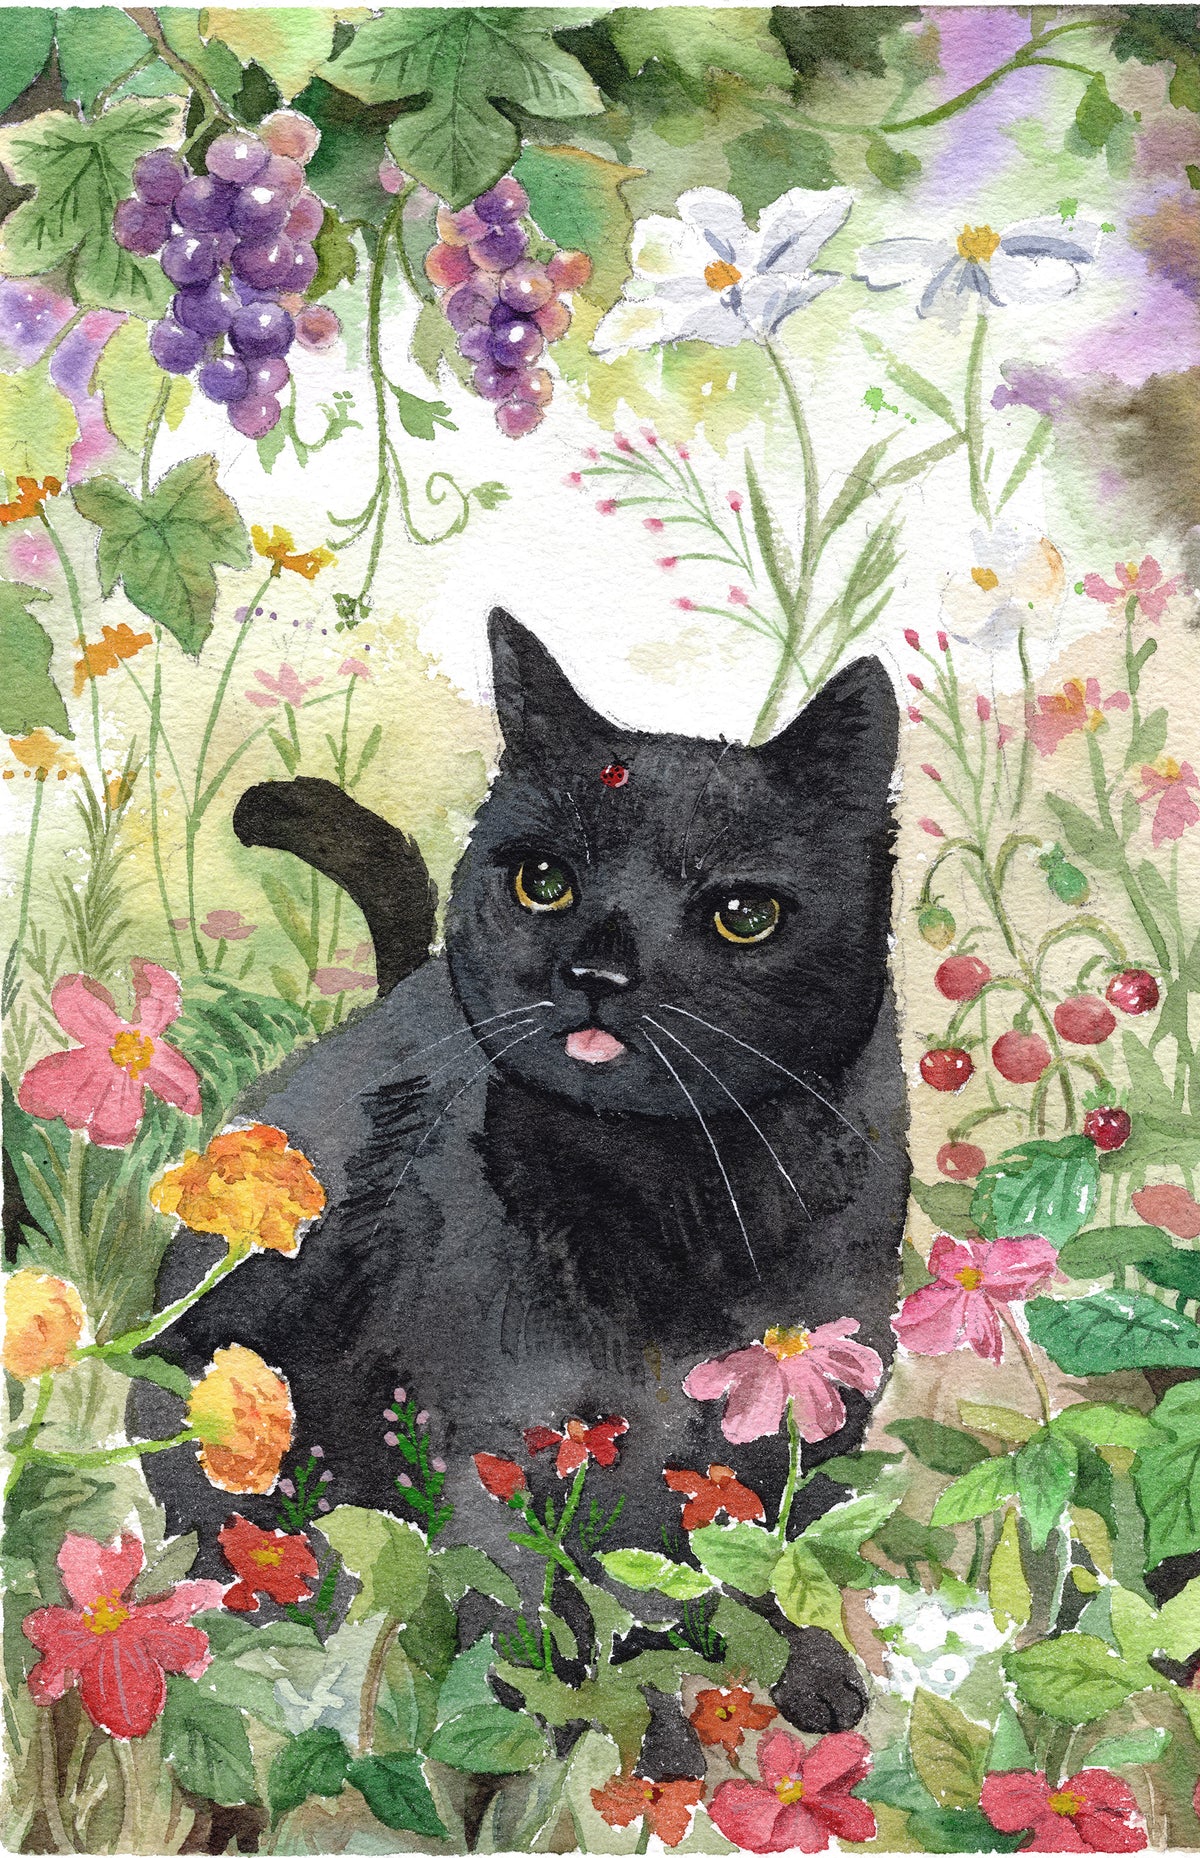 Nancy Liu | Black cat and lady bug